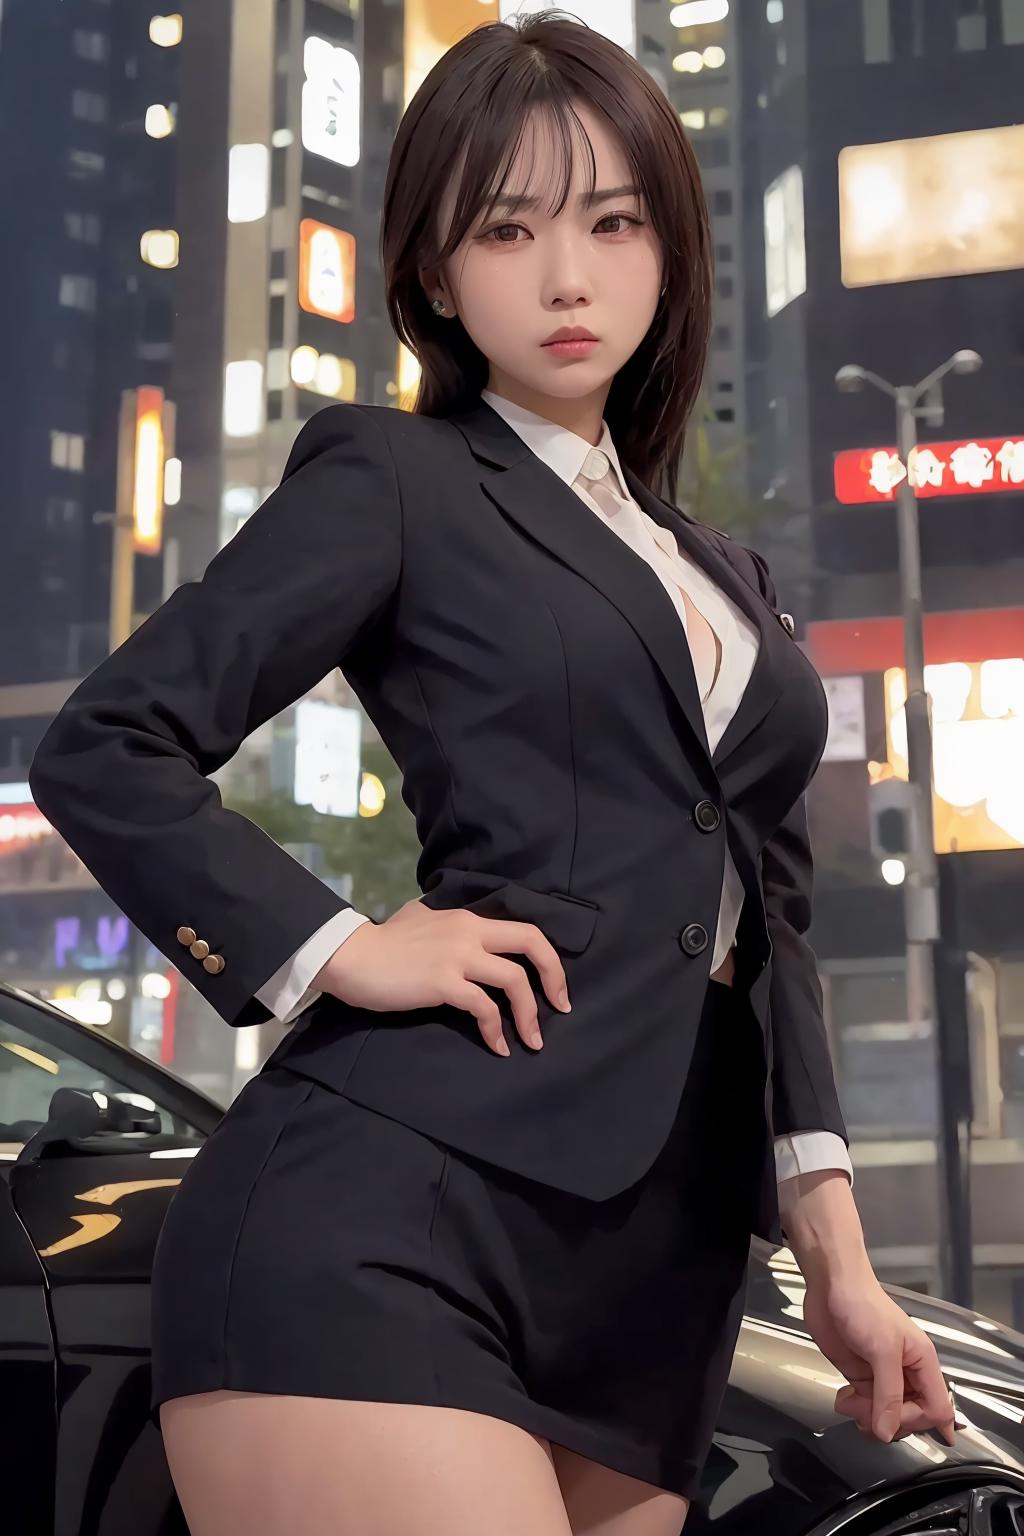 Chinese-Japanese mixed race girl image by allpleoleo439